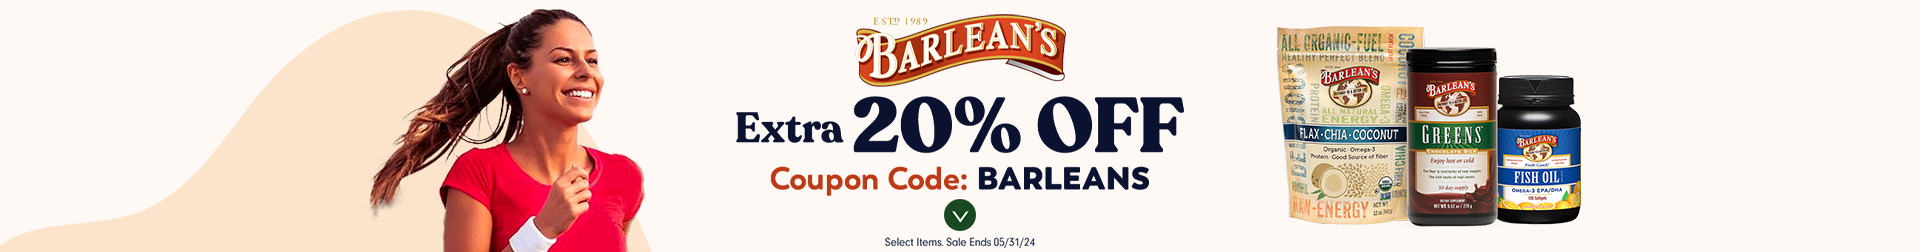 Extra 20% OFF Select Barlean's